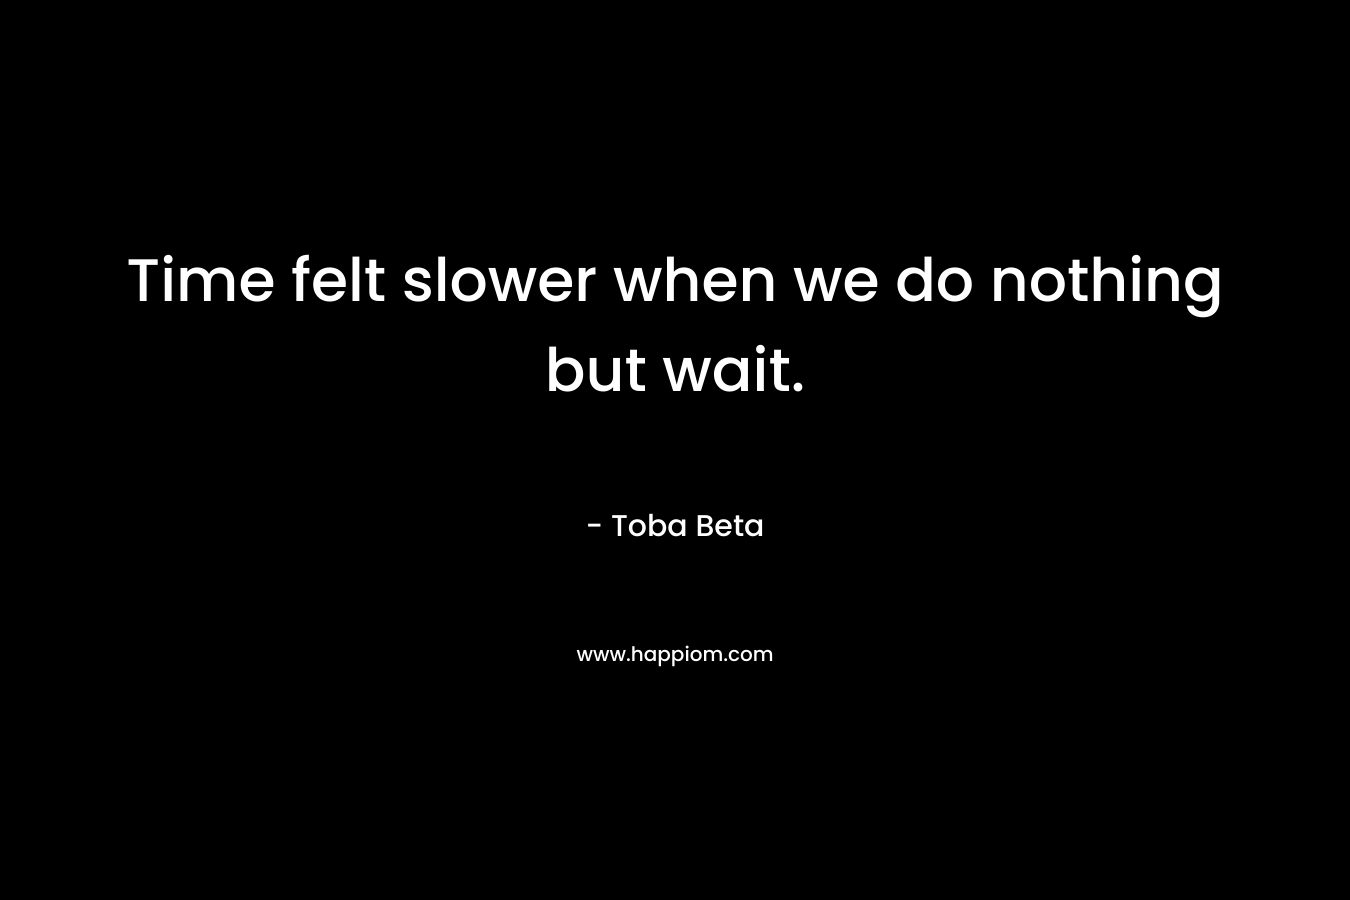 Time felt slower when we do nothing but wait.